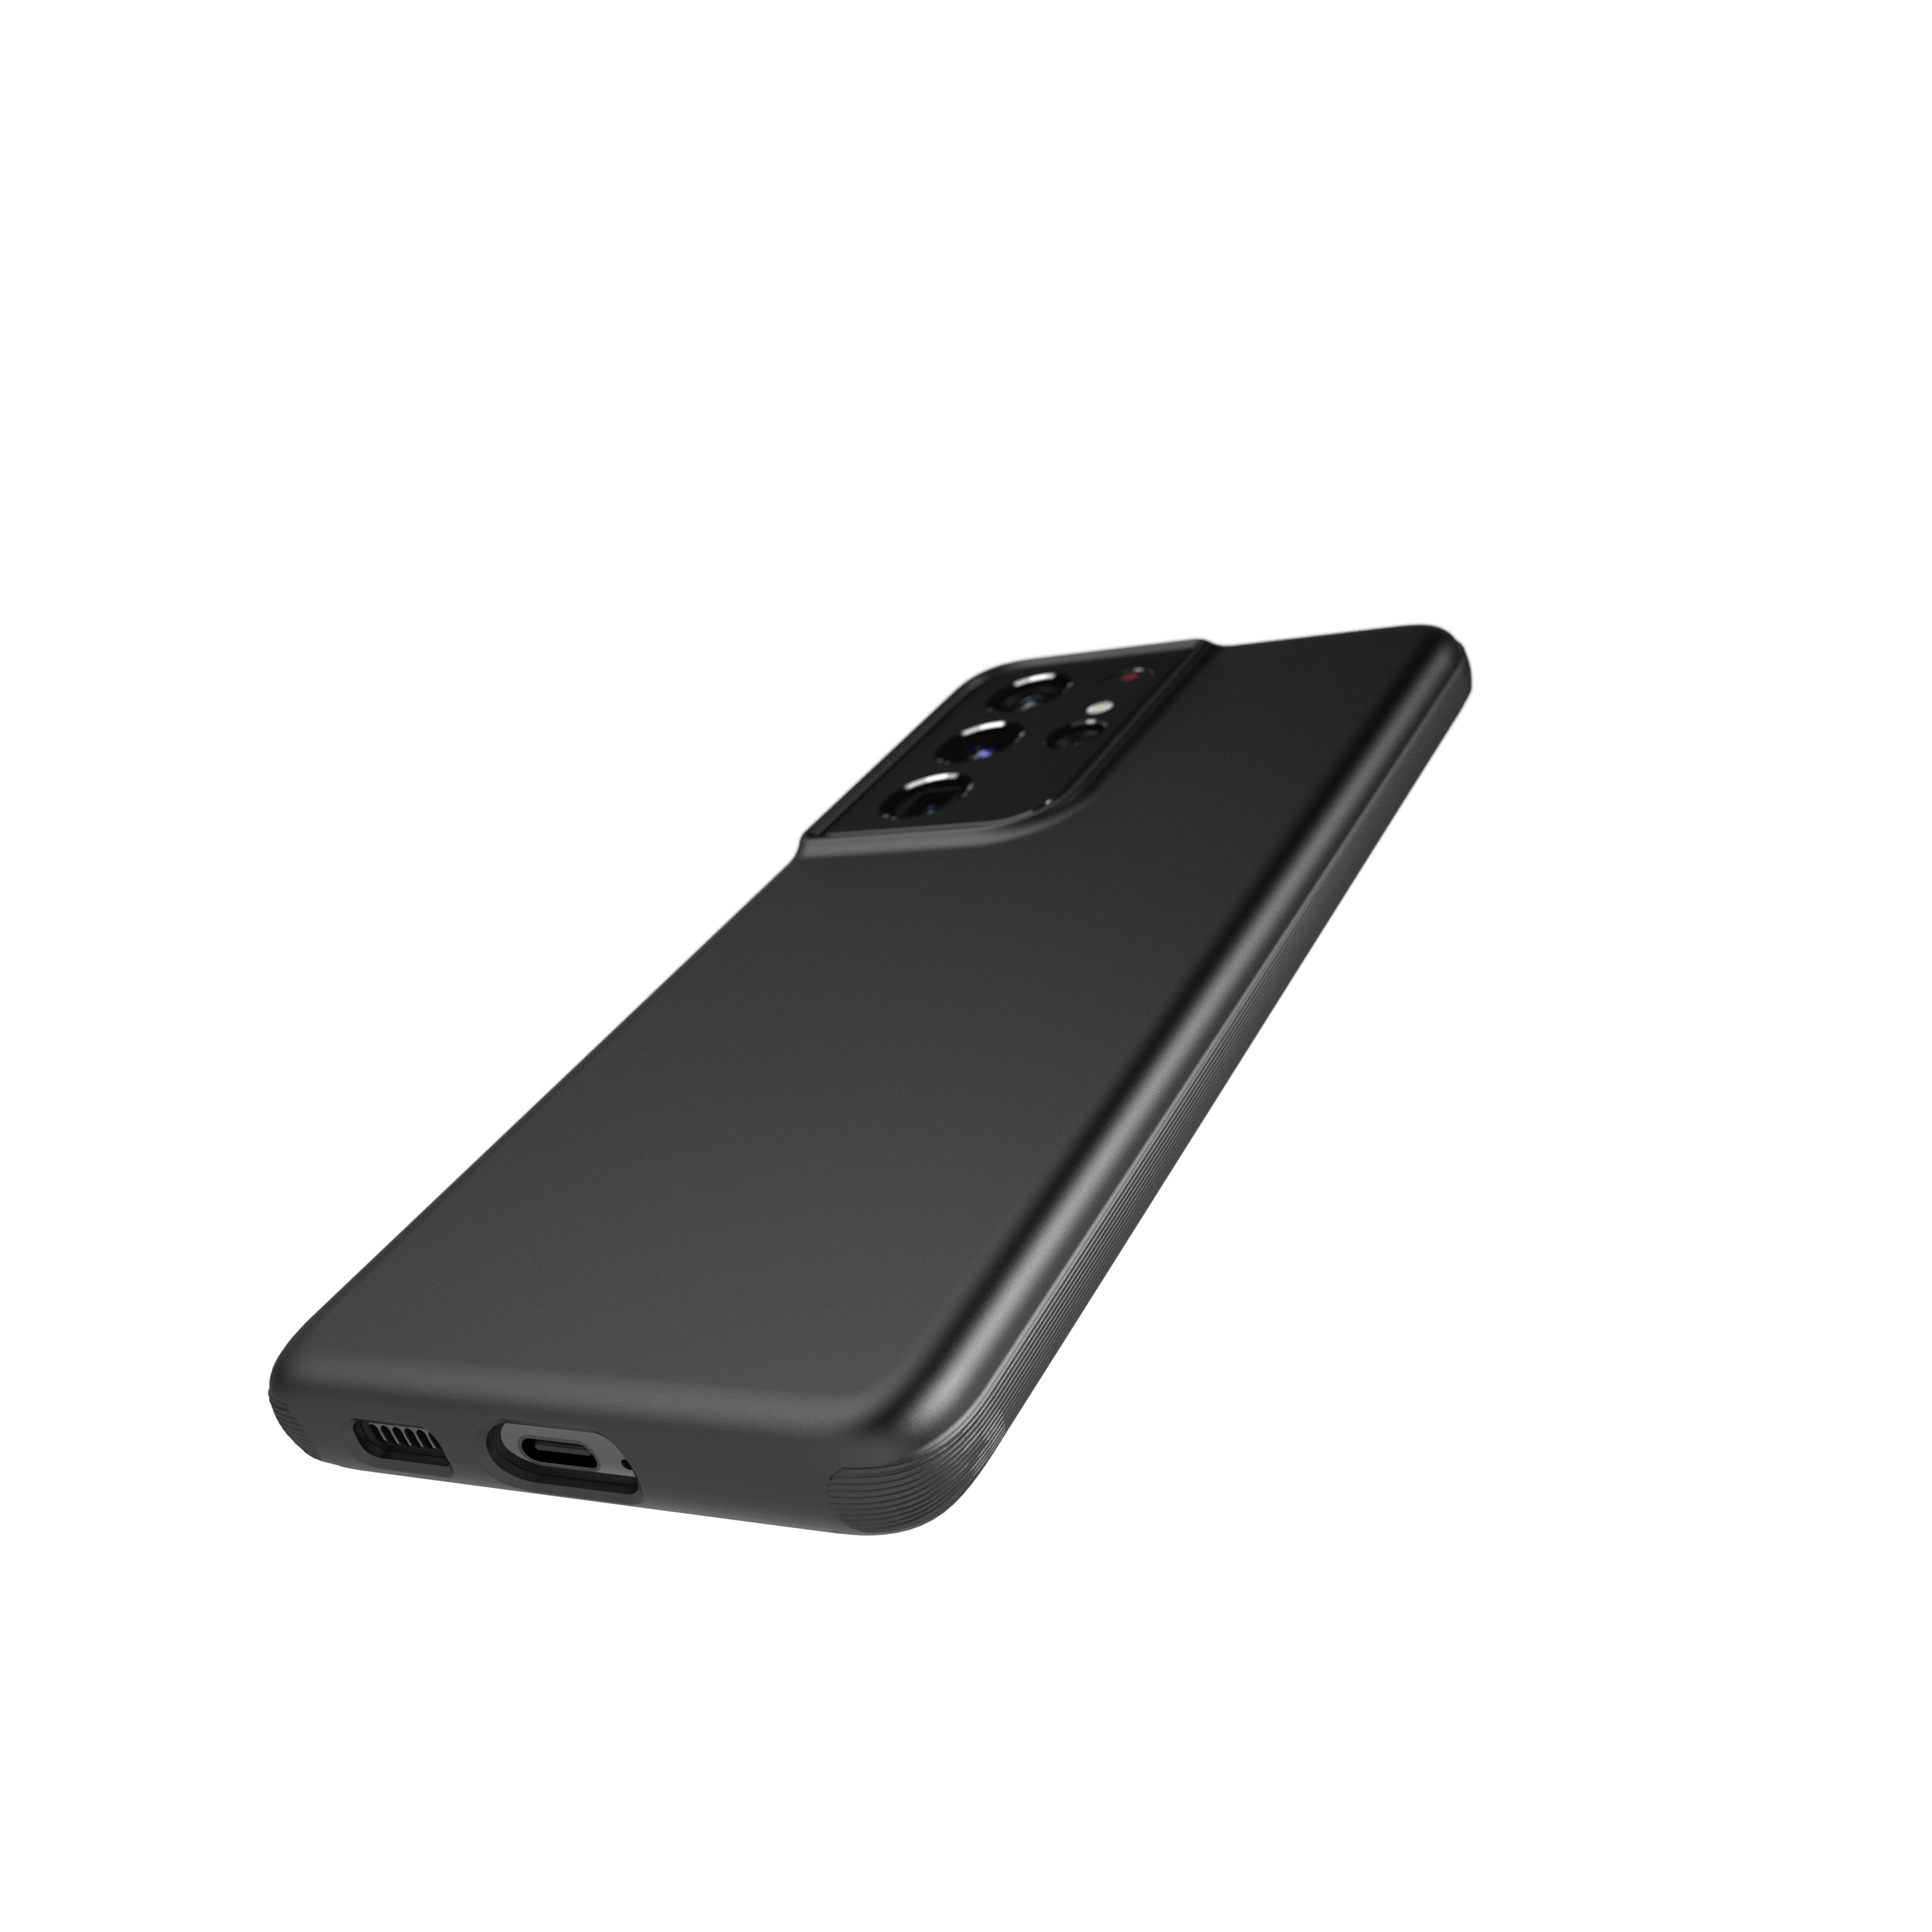 Evo Slim Case Galaxy S21 Ultra Charcoal Black